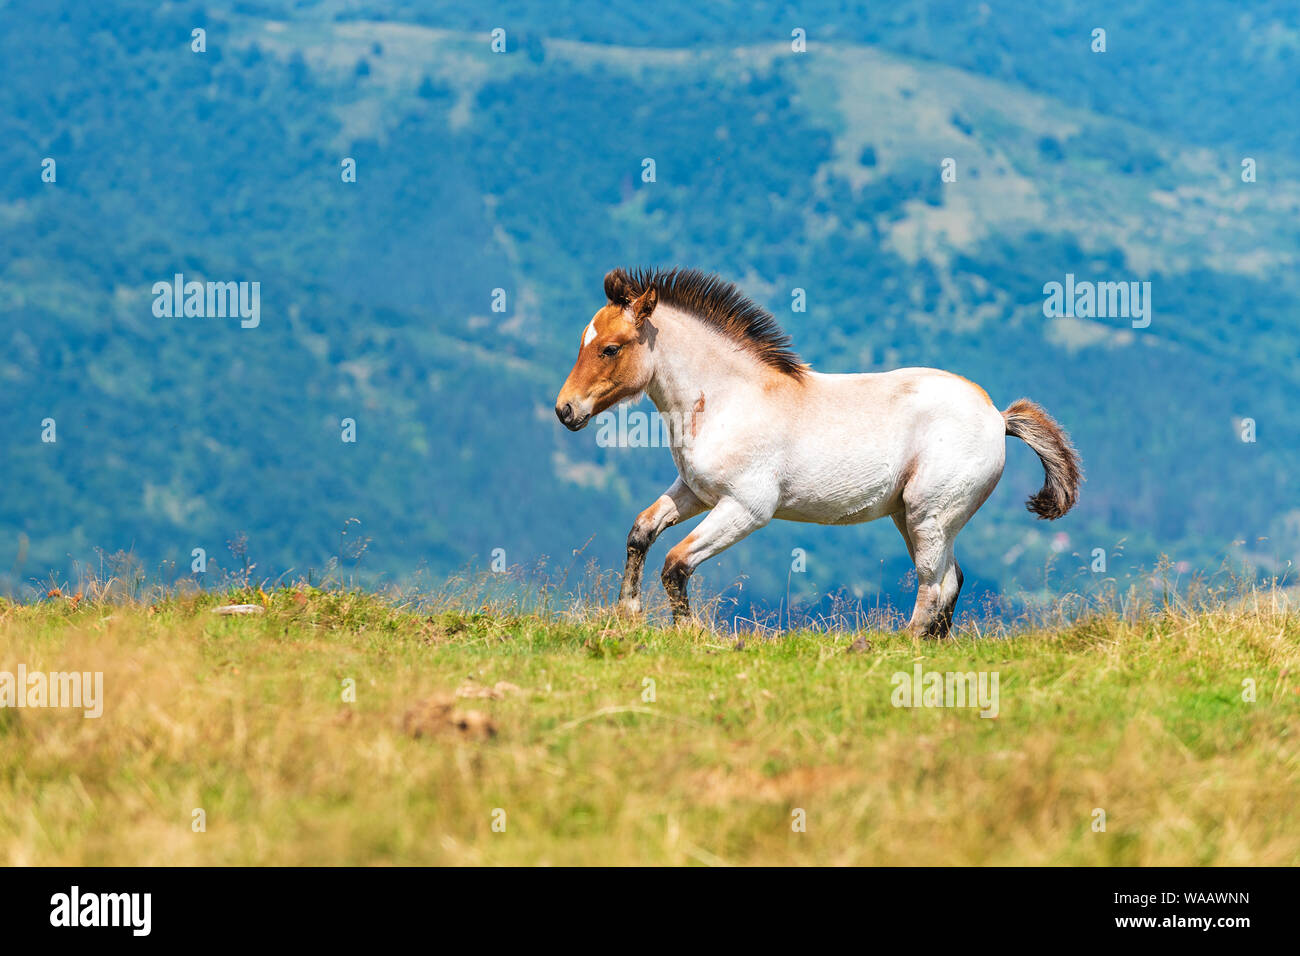 chestnut horse runs gallop on a spring, summer field Stock Photo